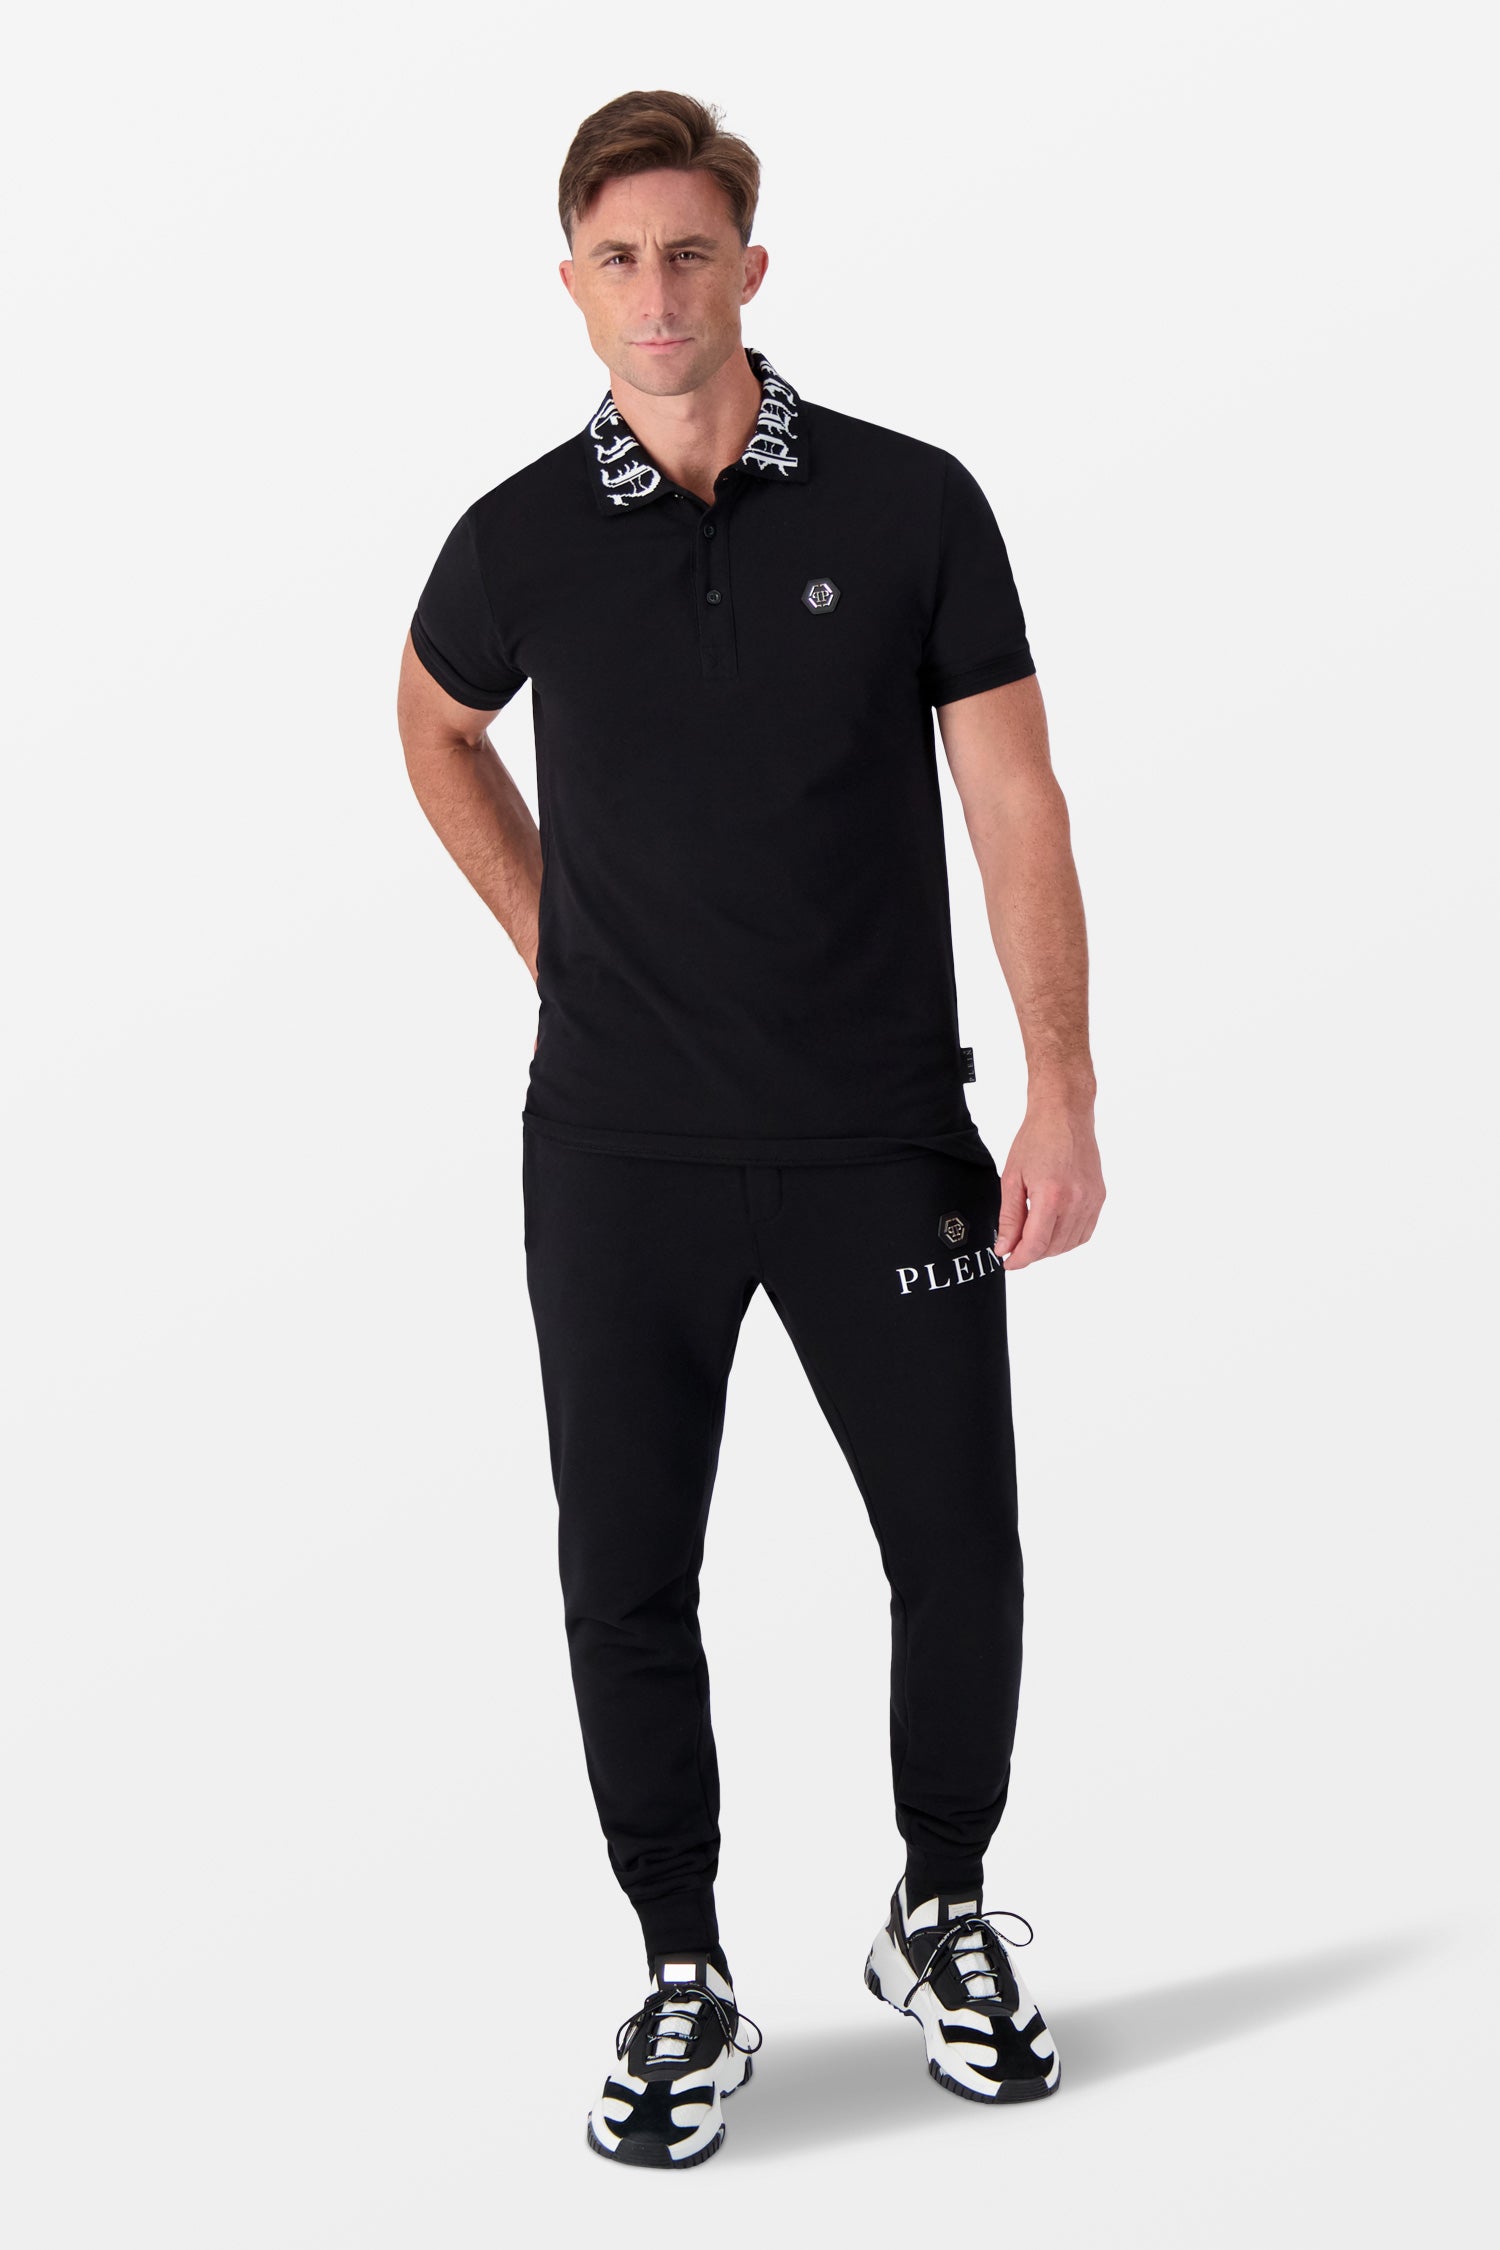 Philipp Plein Black Short-Sleeve Polo